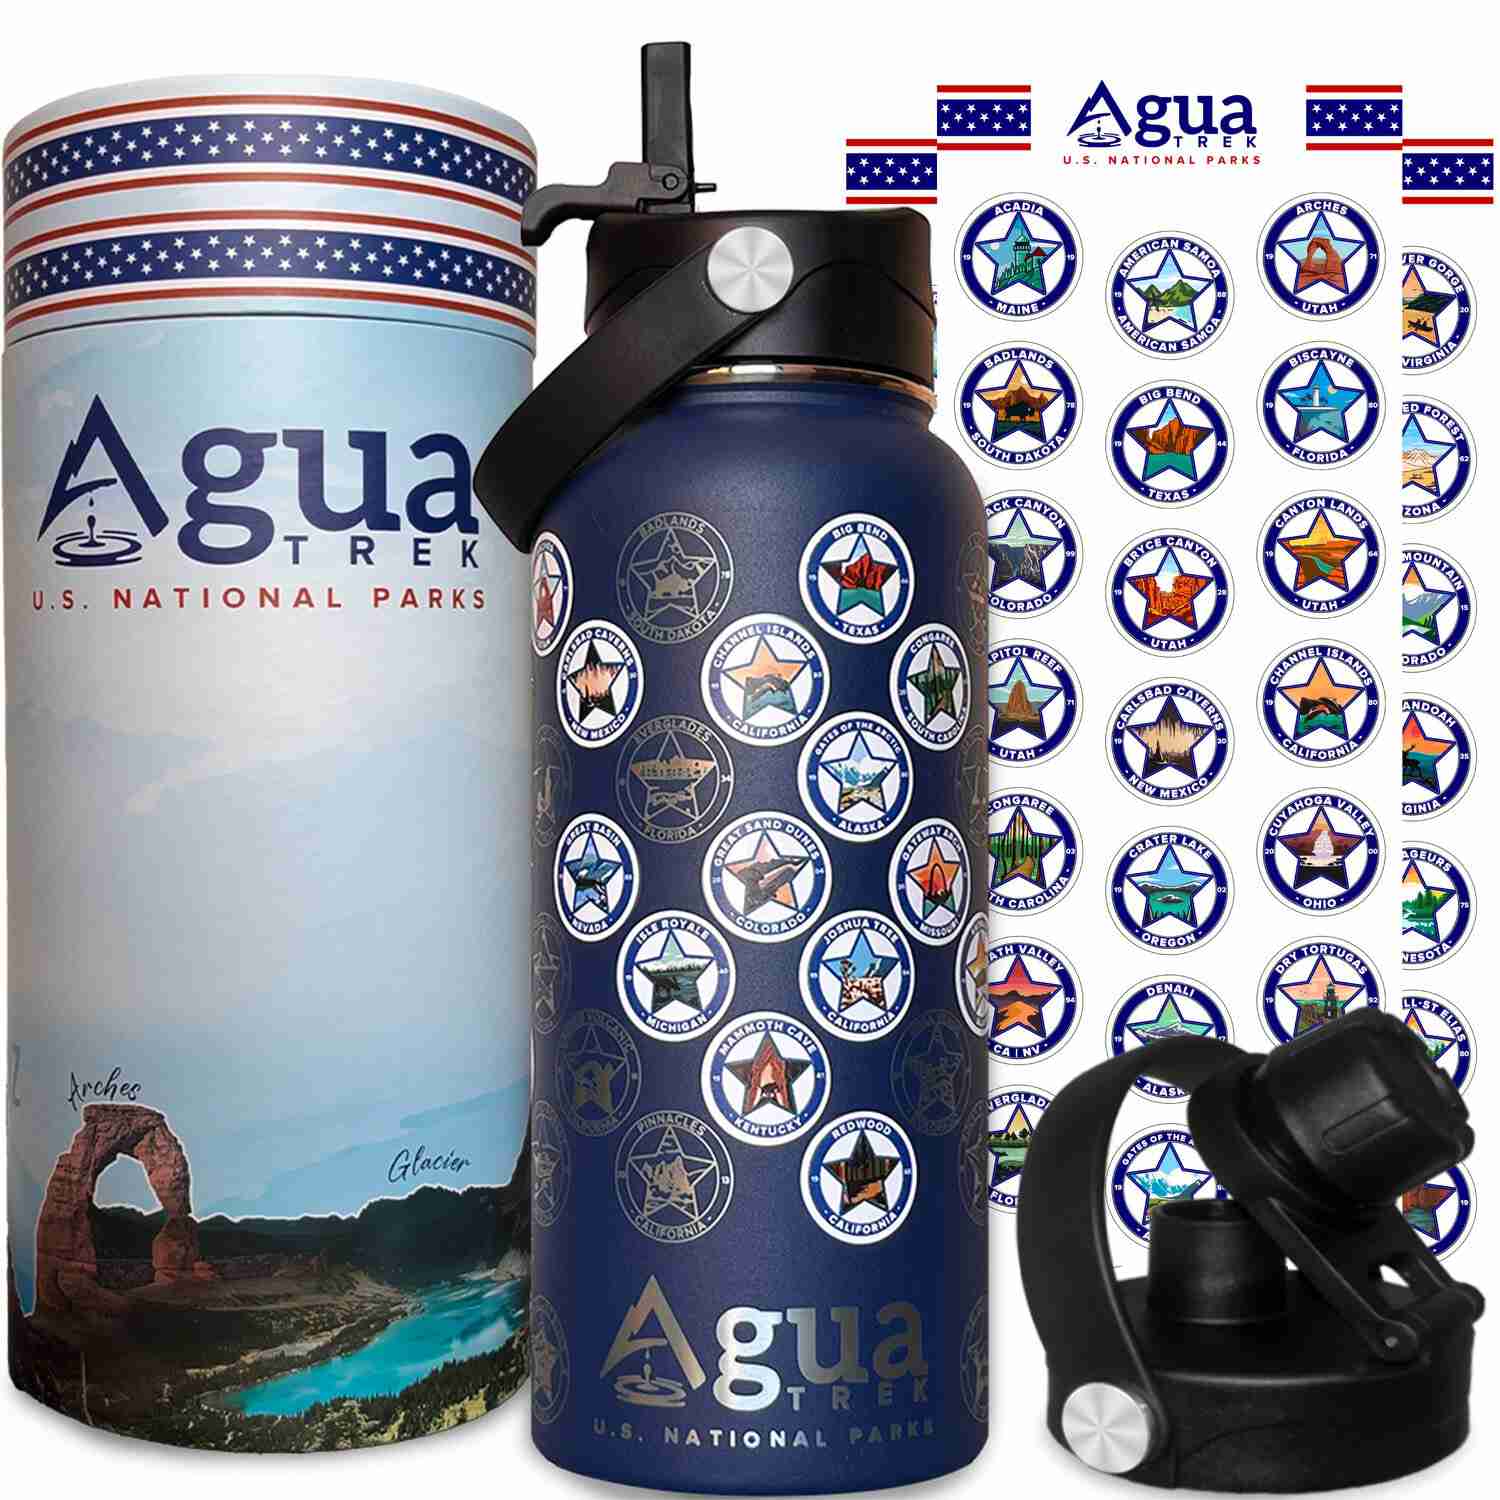 aguatrek-national-park-water-bottle with cash back rebate